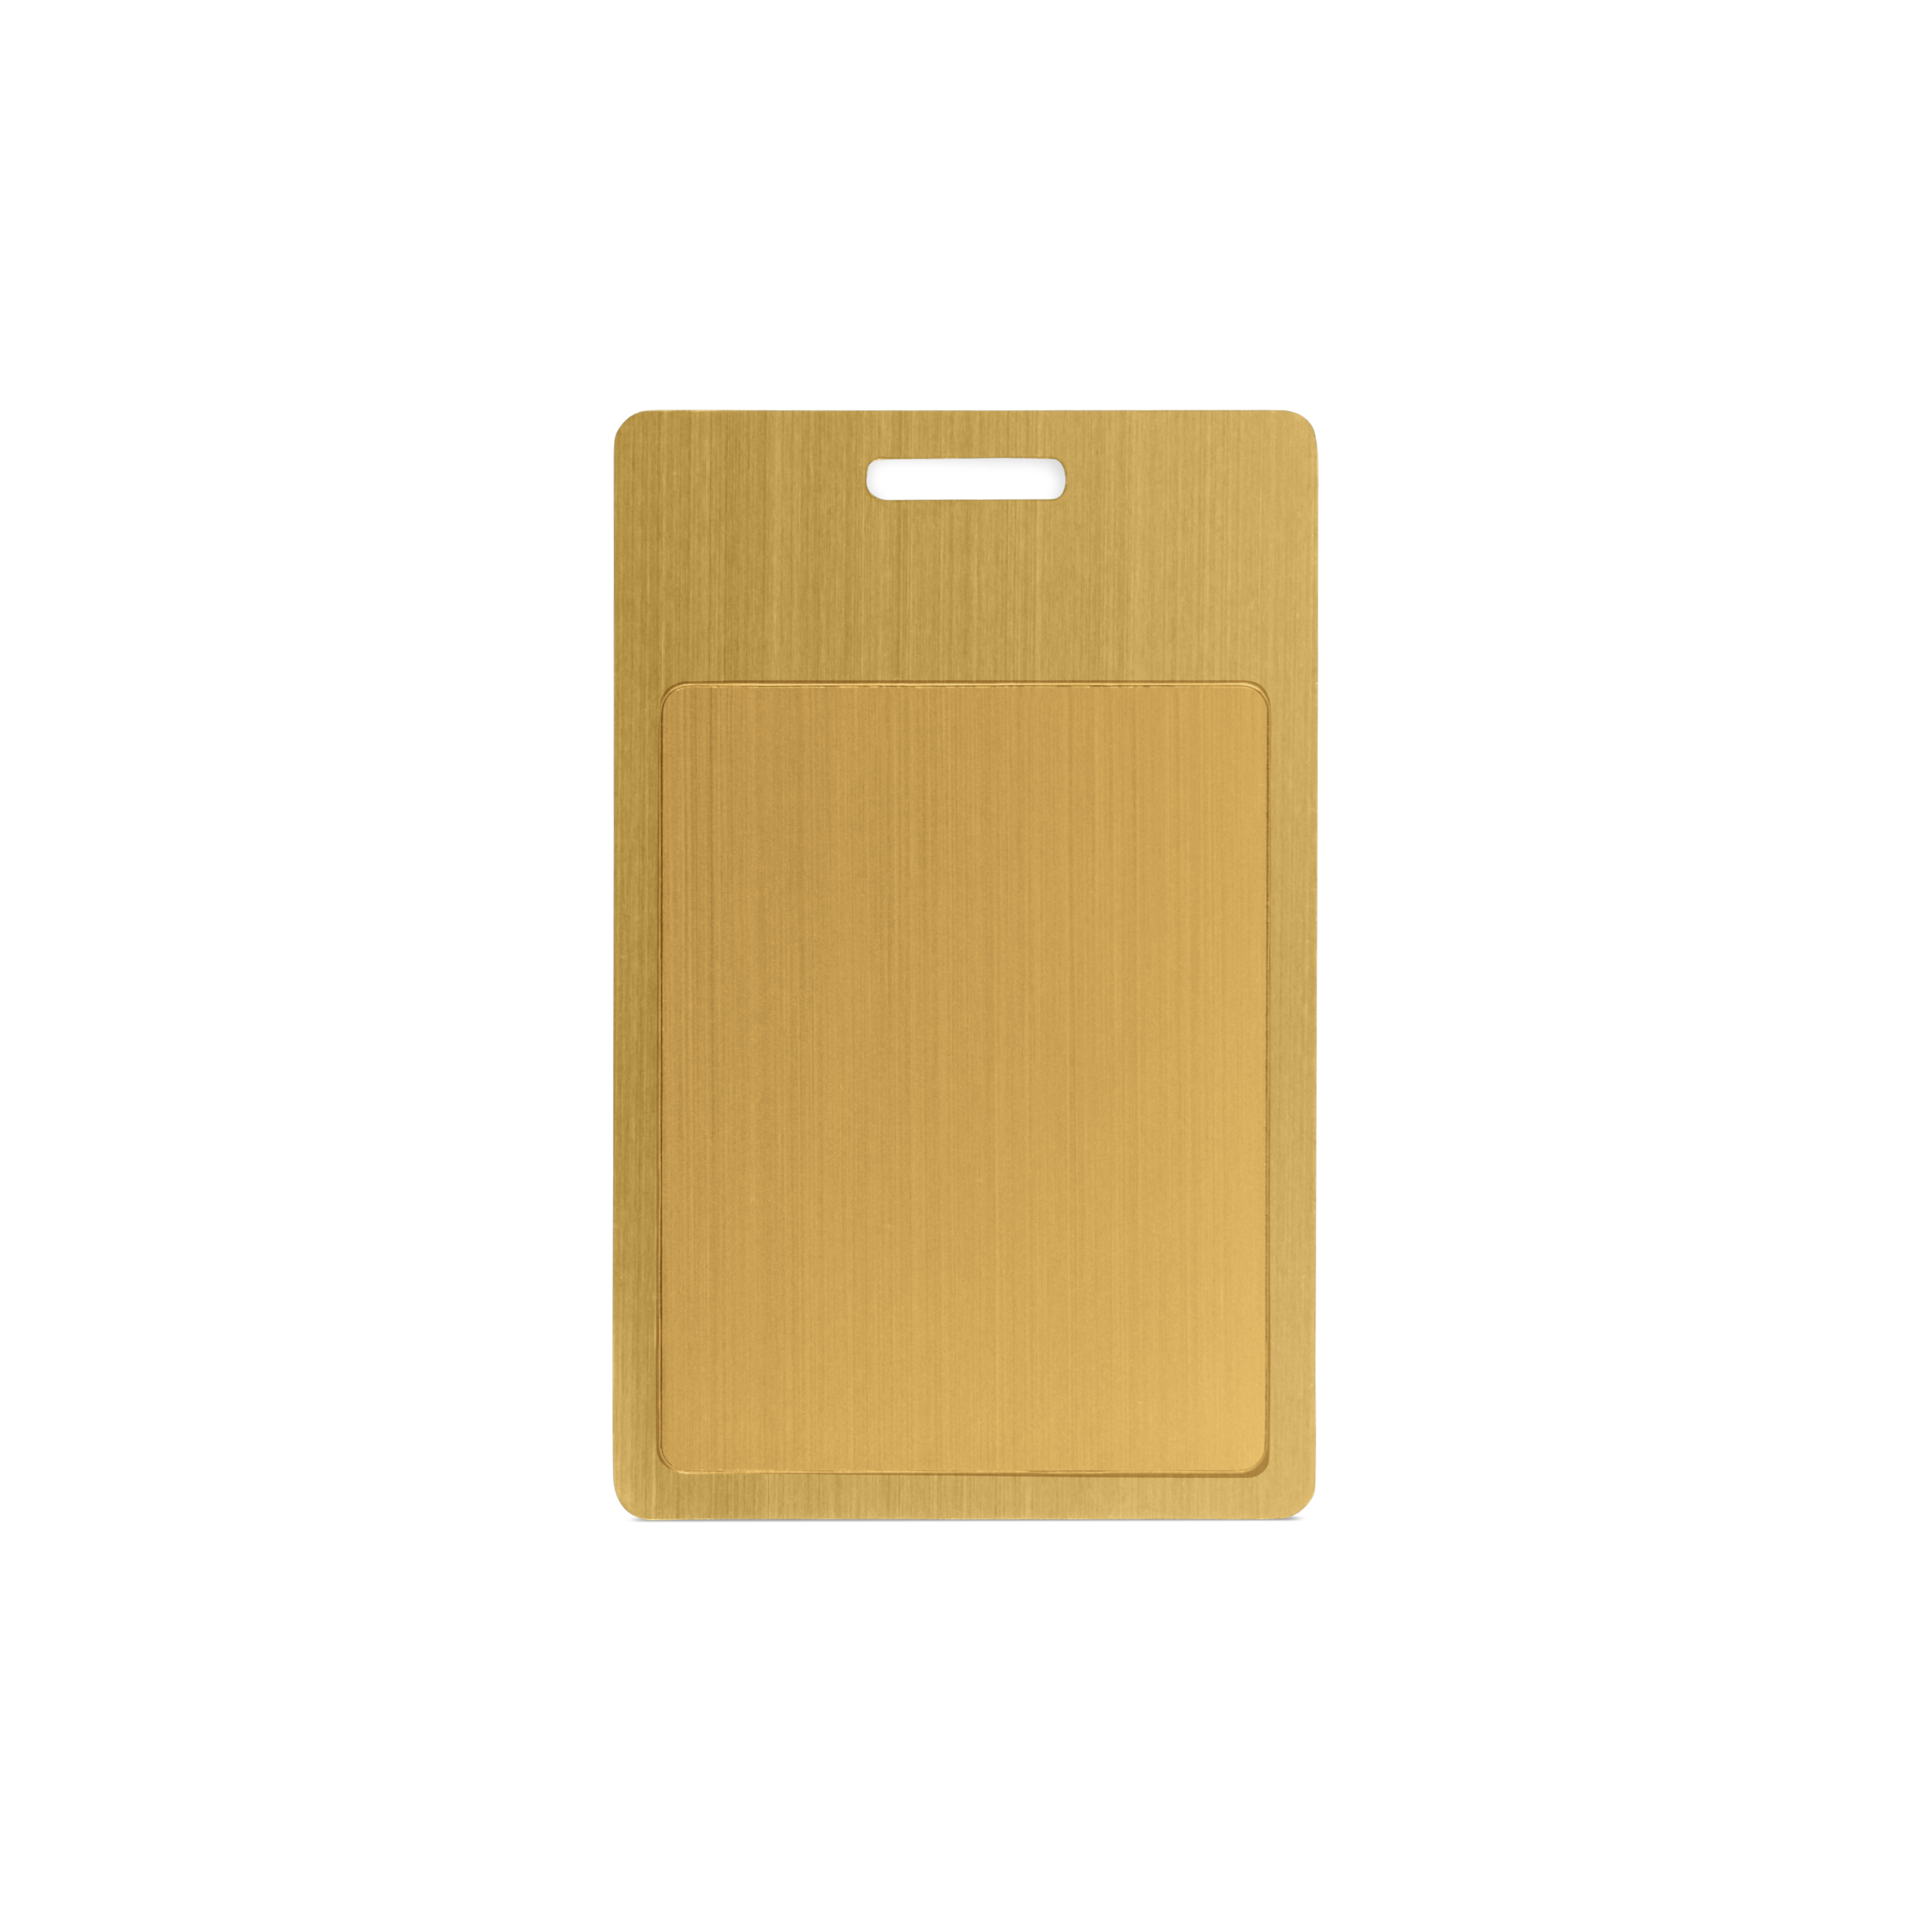 NFC Karte Metall beidseitig bedruckt - 85,6 x 54 mm - NTAG213 - 180 Byte - gold - Hochformat mit Schlitz